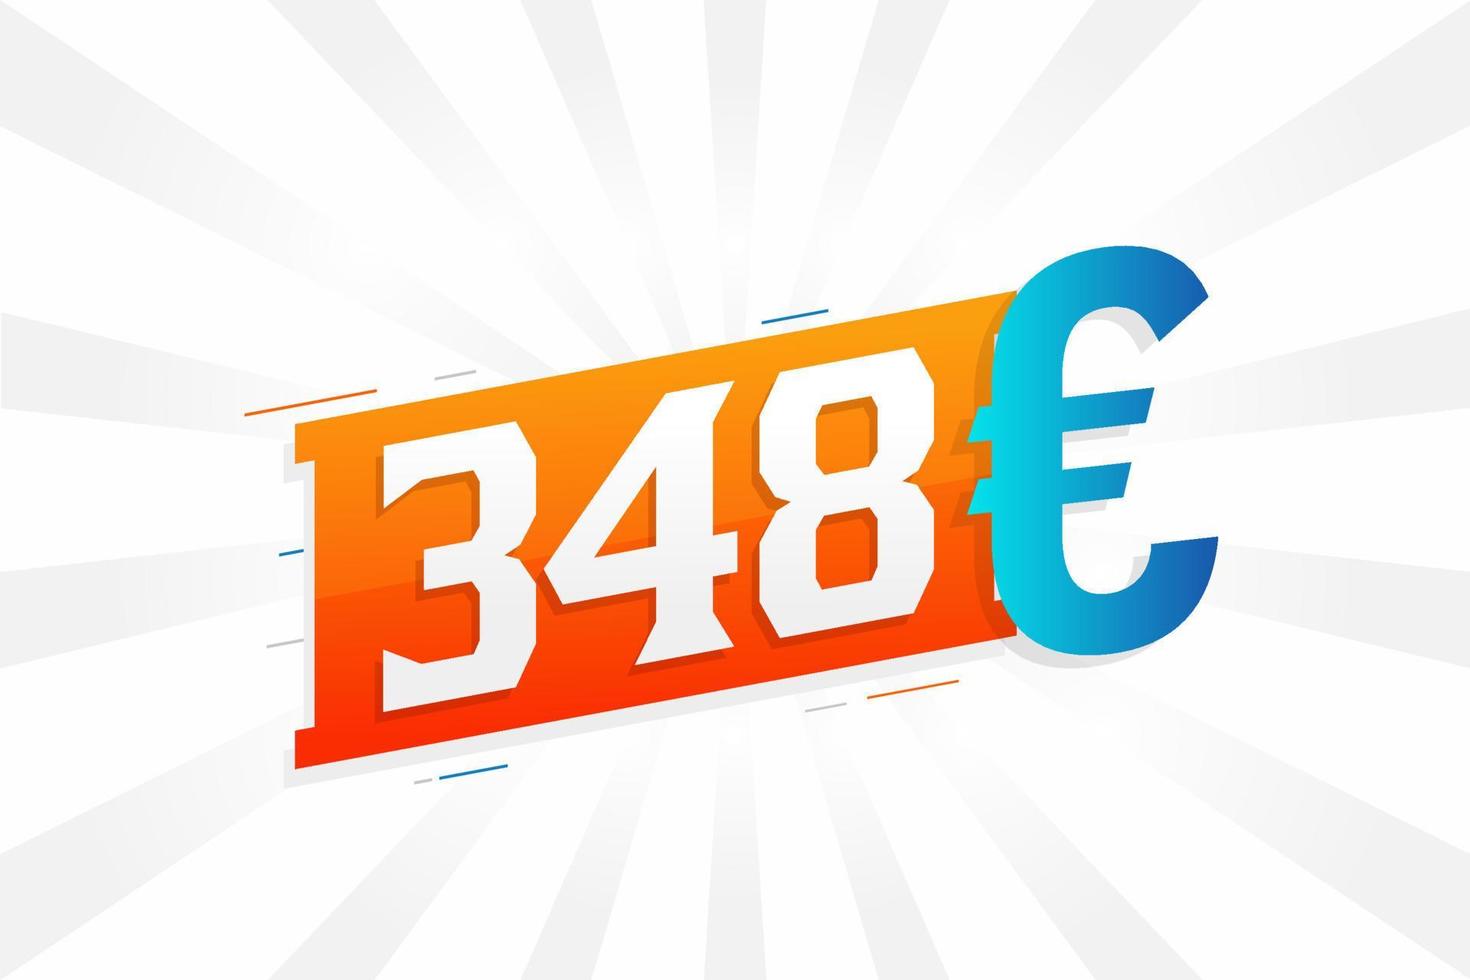 348 euro valuta vektor text symbol. 348 euro europeisk union pengar stock vektor